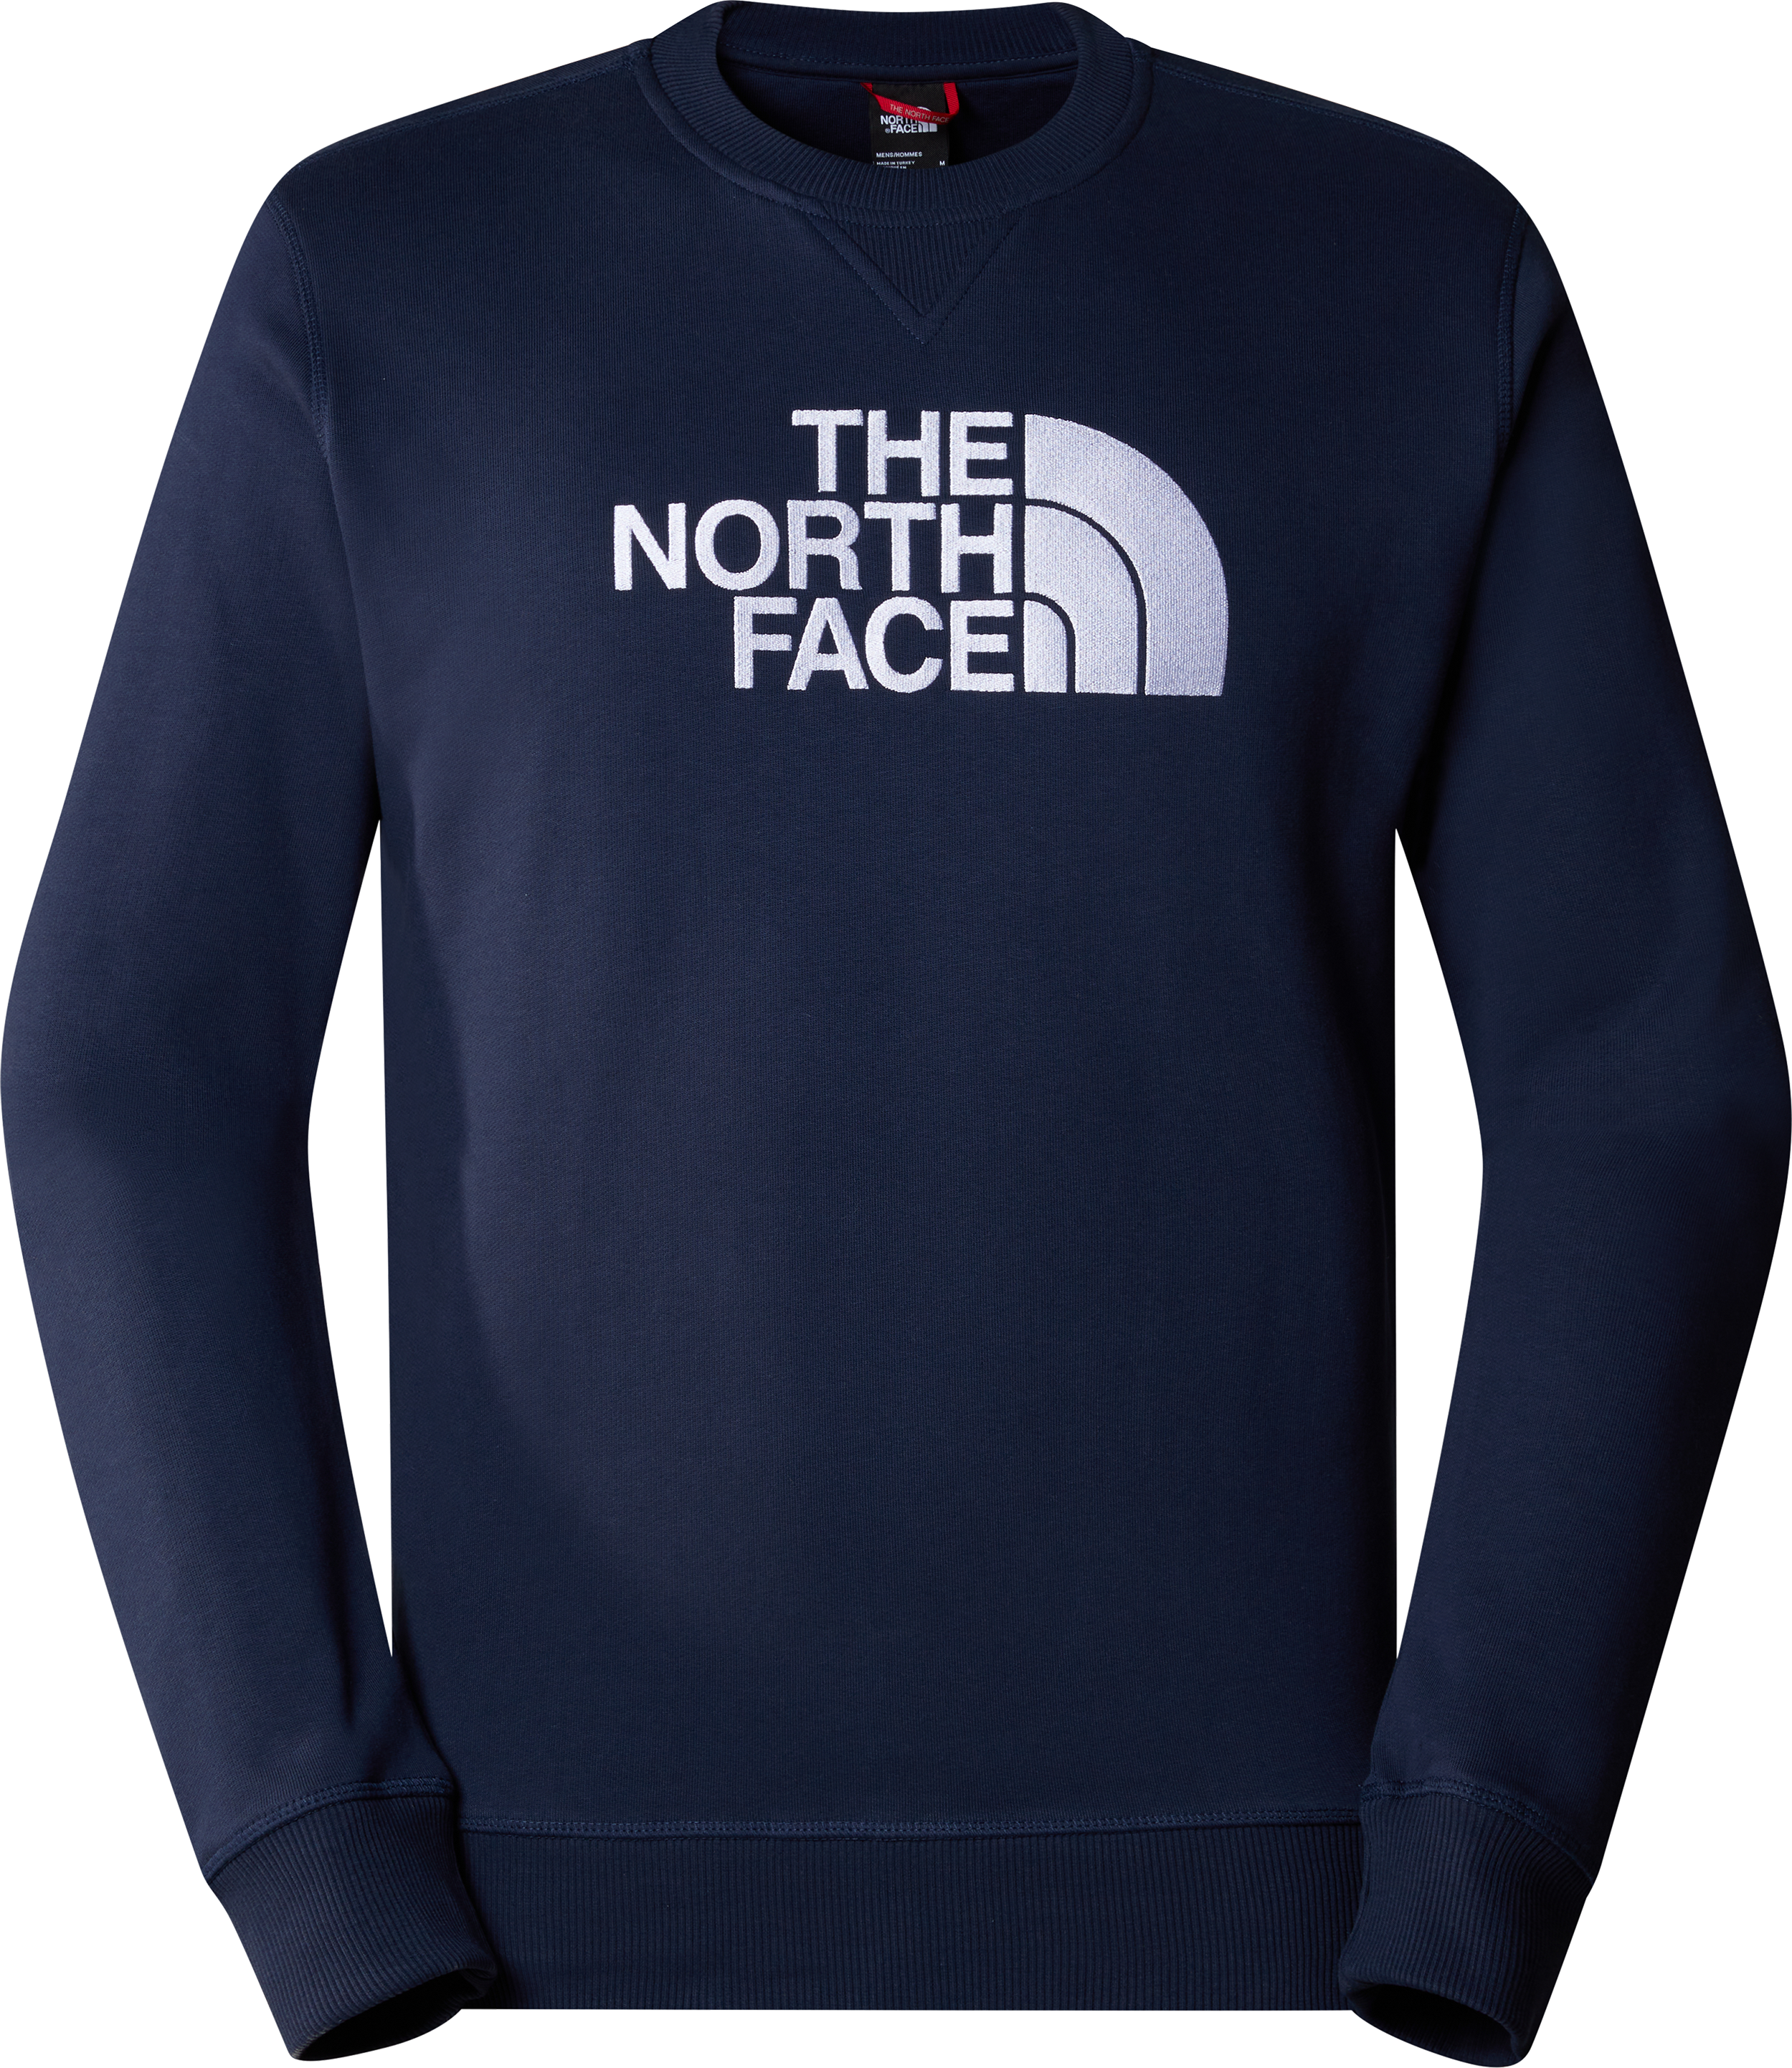 The North Face Men’s Drew Peak Crew Tnfblack/Tnfwht